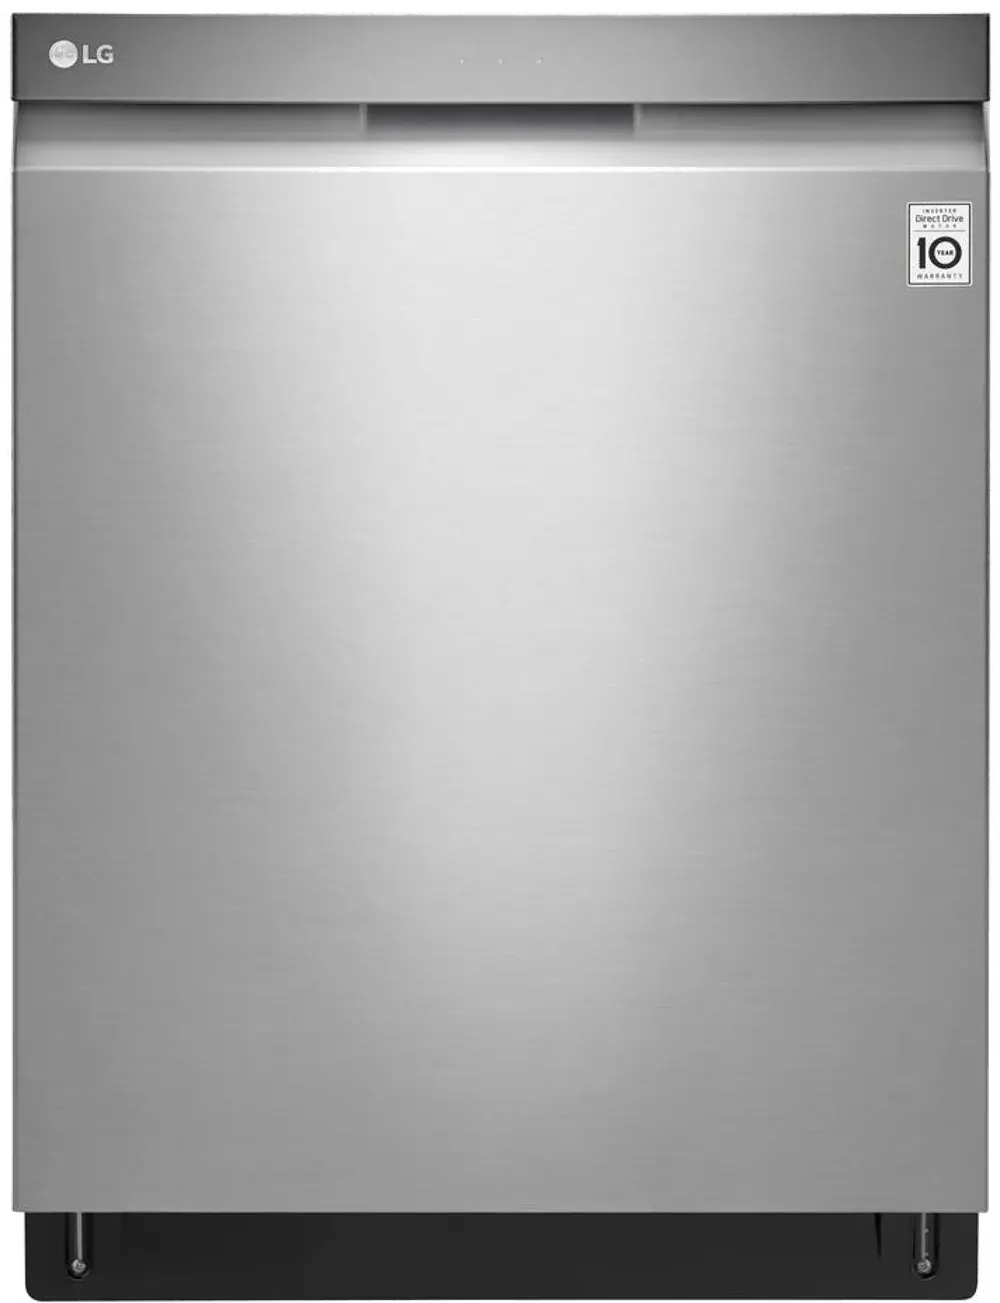 LDP6797ST LG WiFi Enabled Smart Dishwasher - Fingerprint Resistant Stainless Steel-1